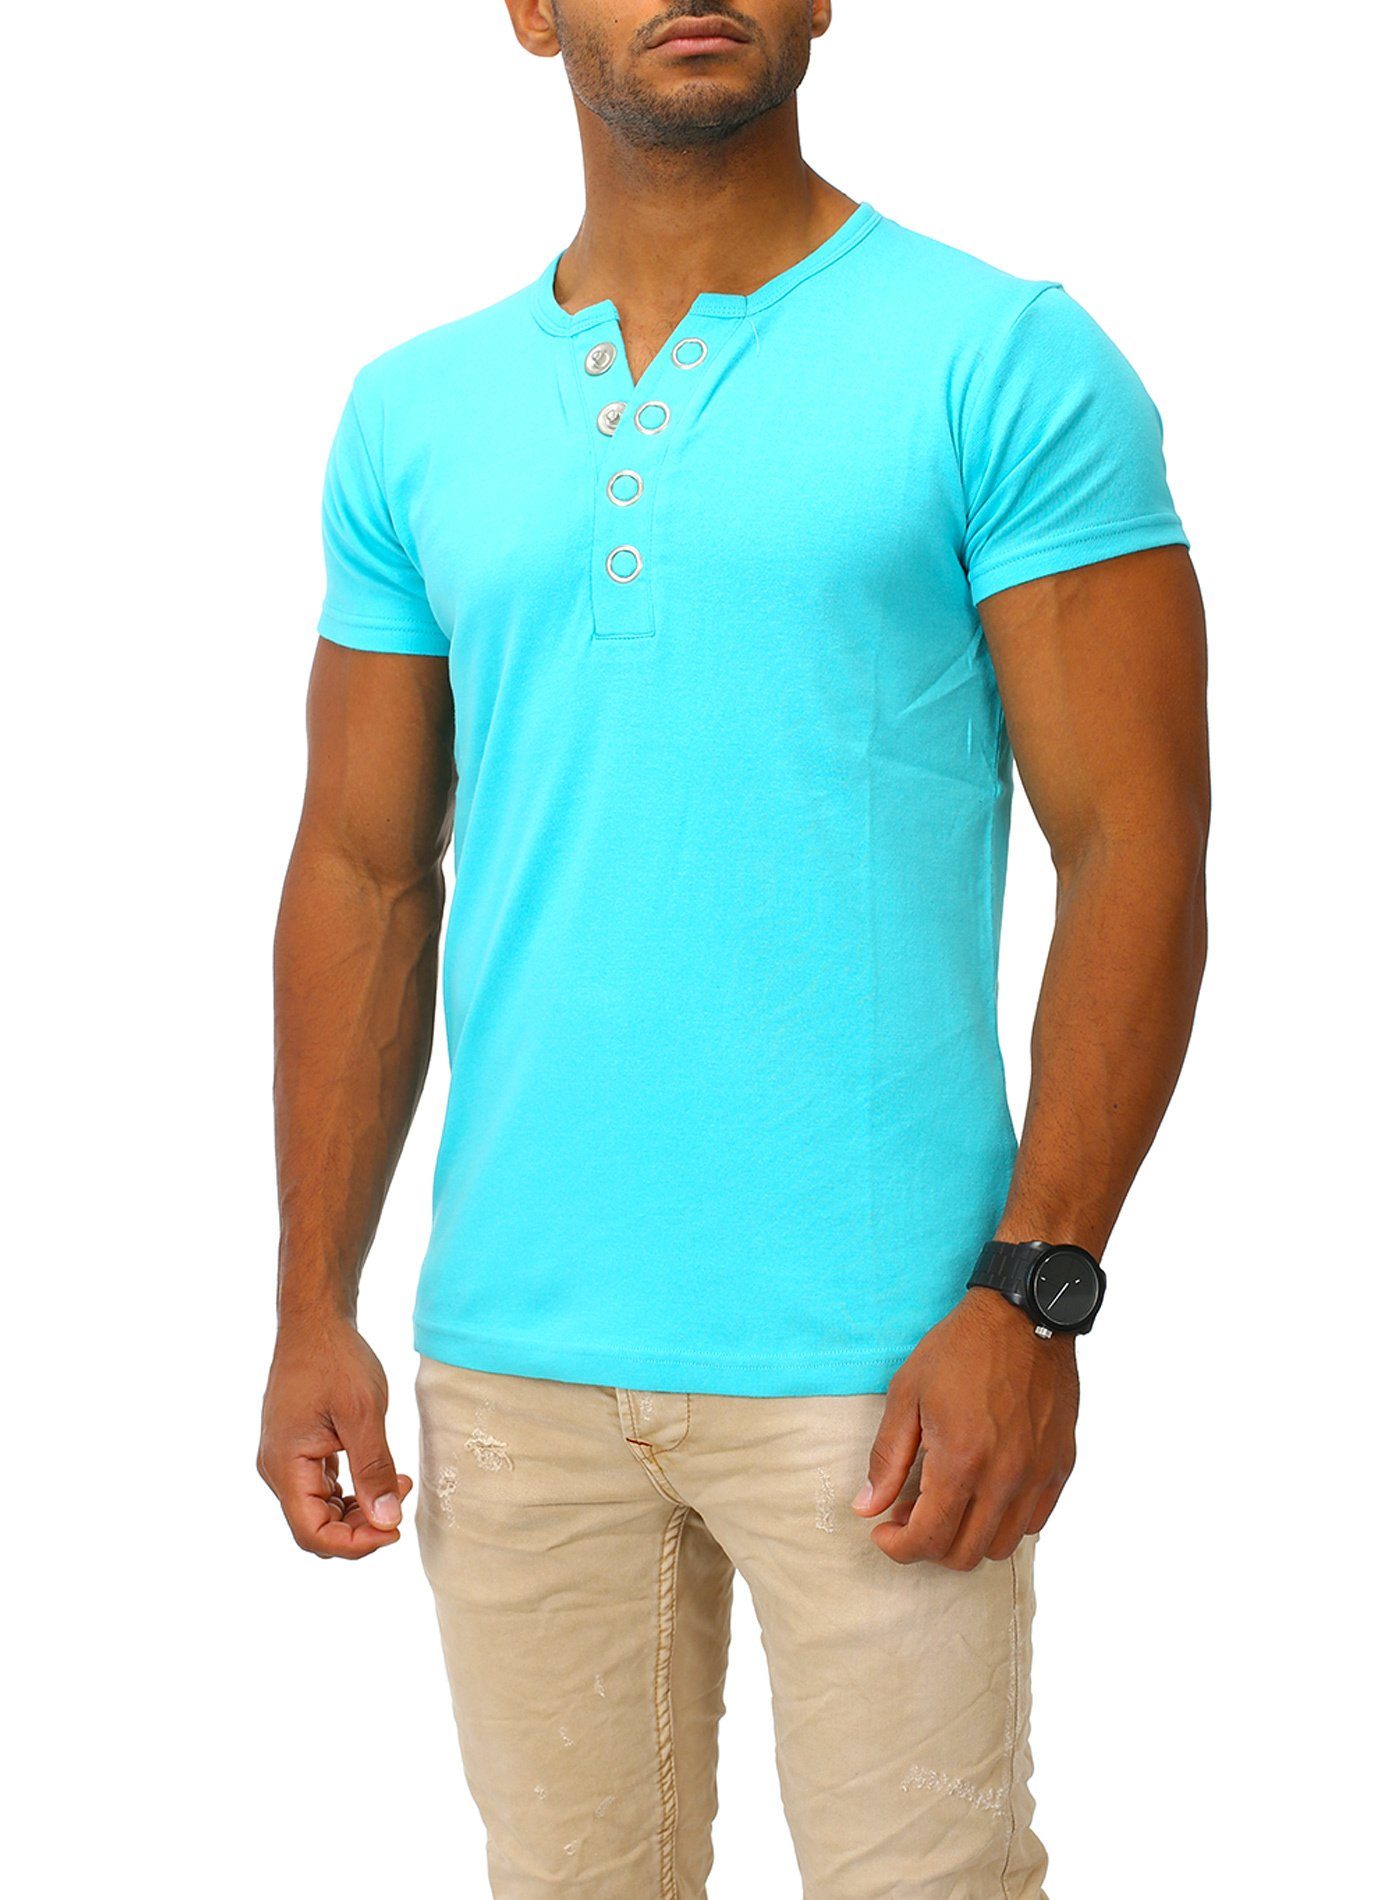 Joe Franks T-Shirt Big Button in stylischem Slim Fit turquoise